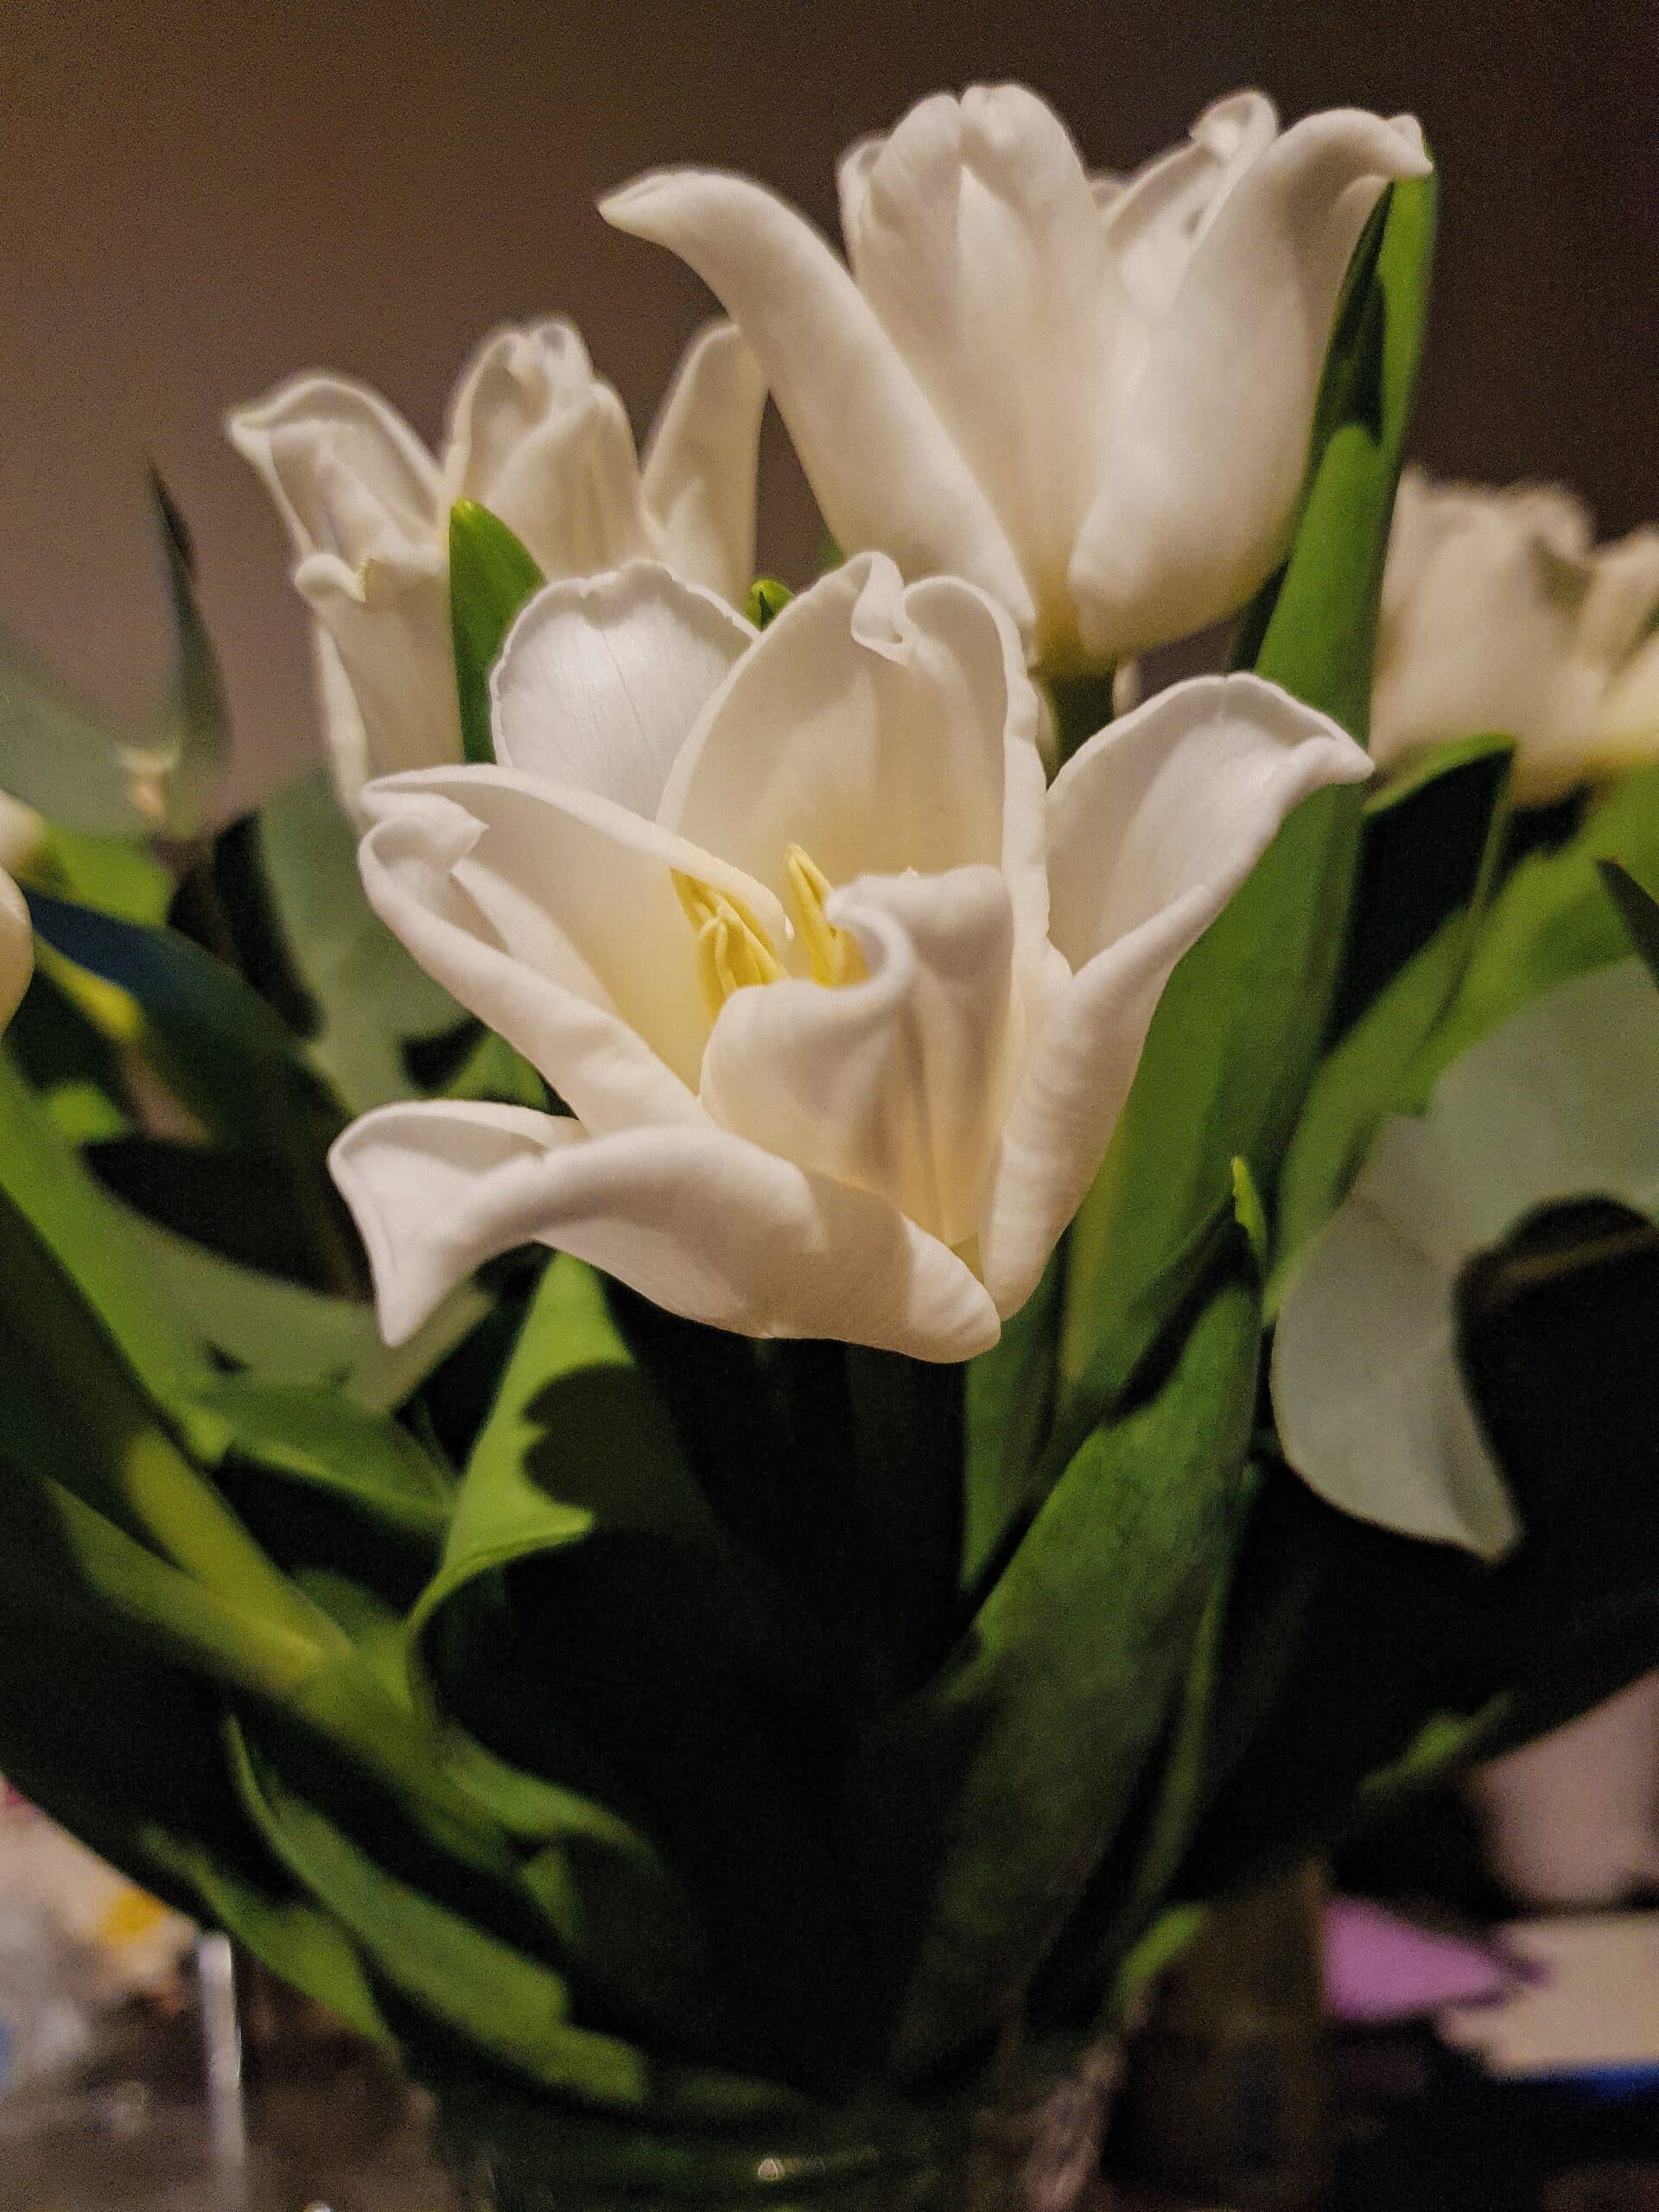 White lilies flowers with dark lighting